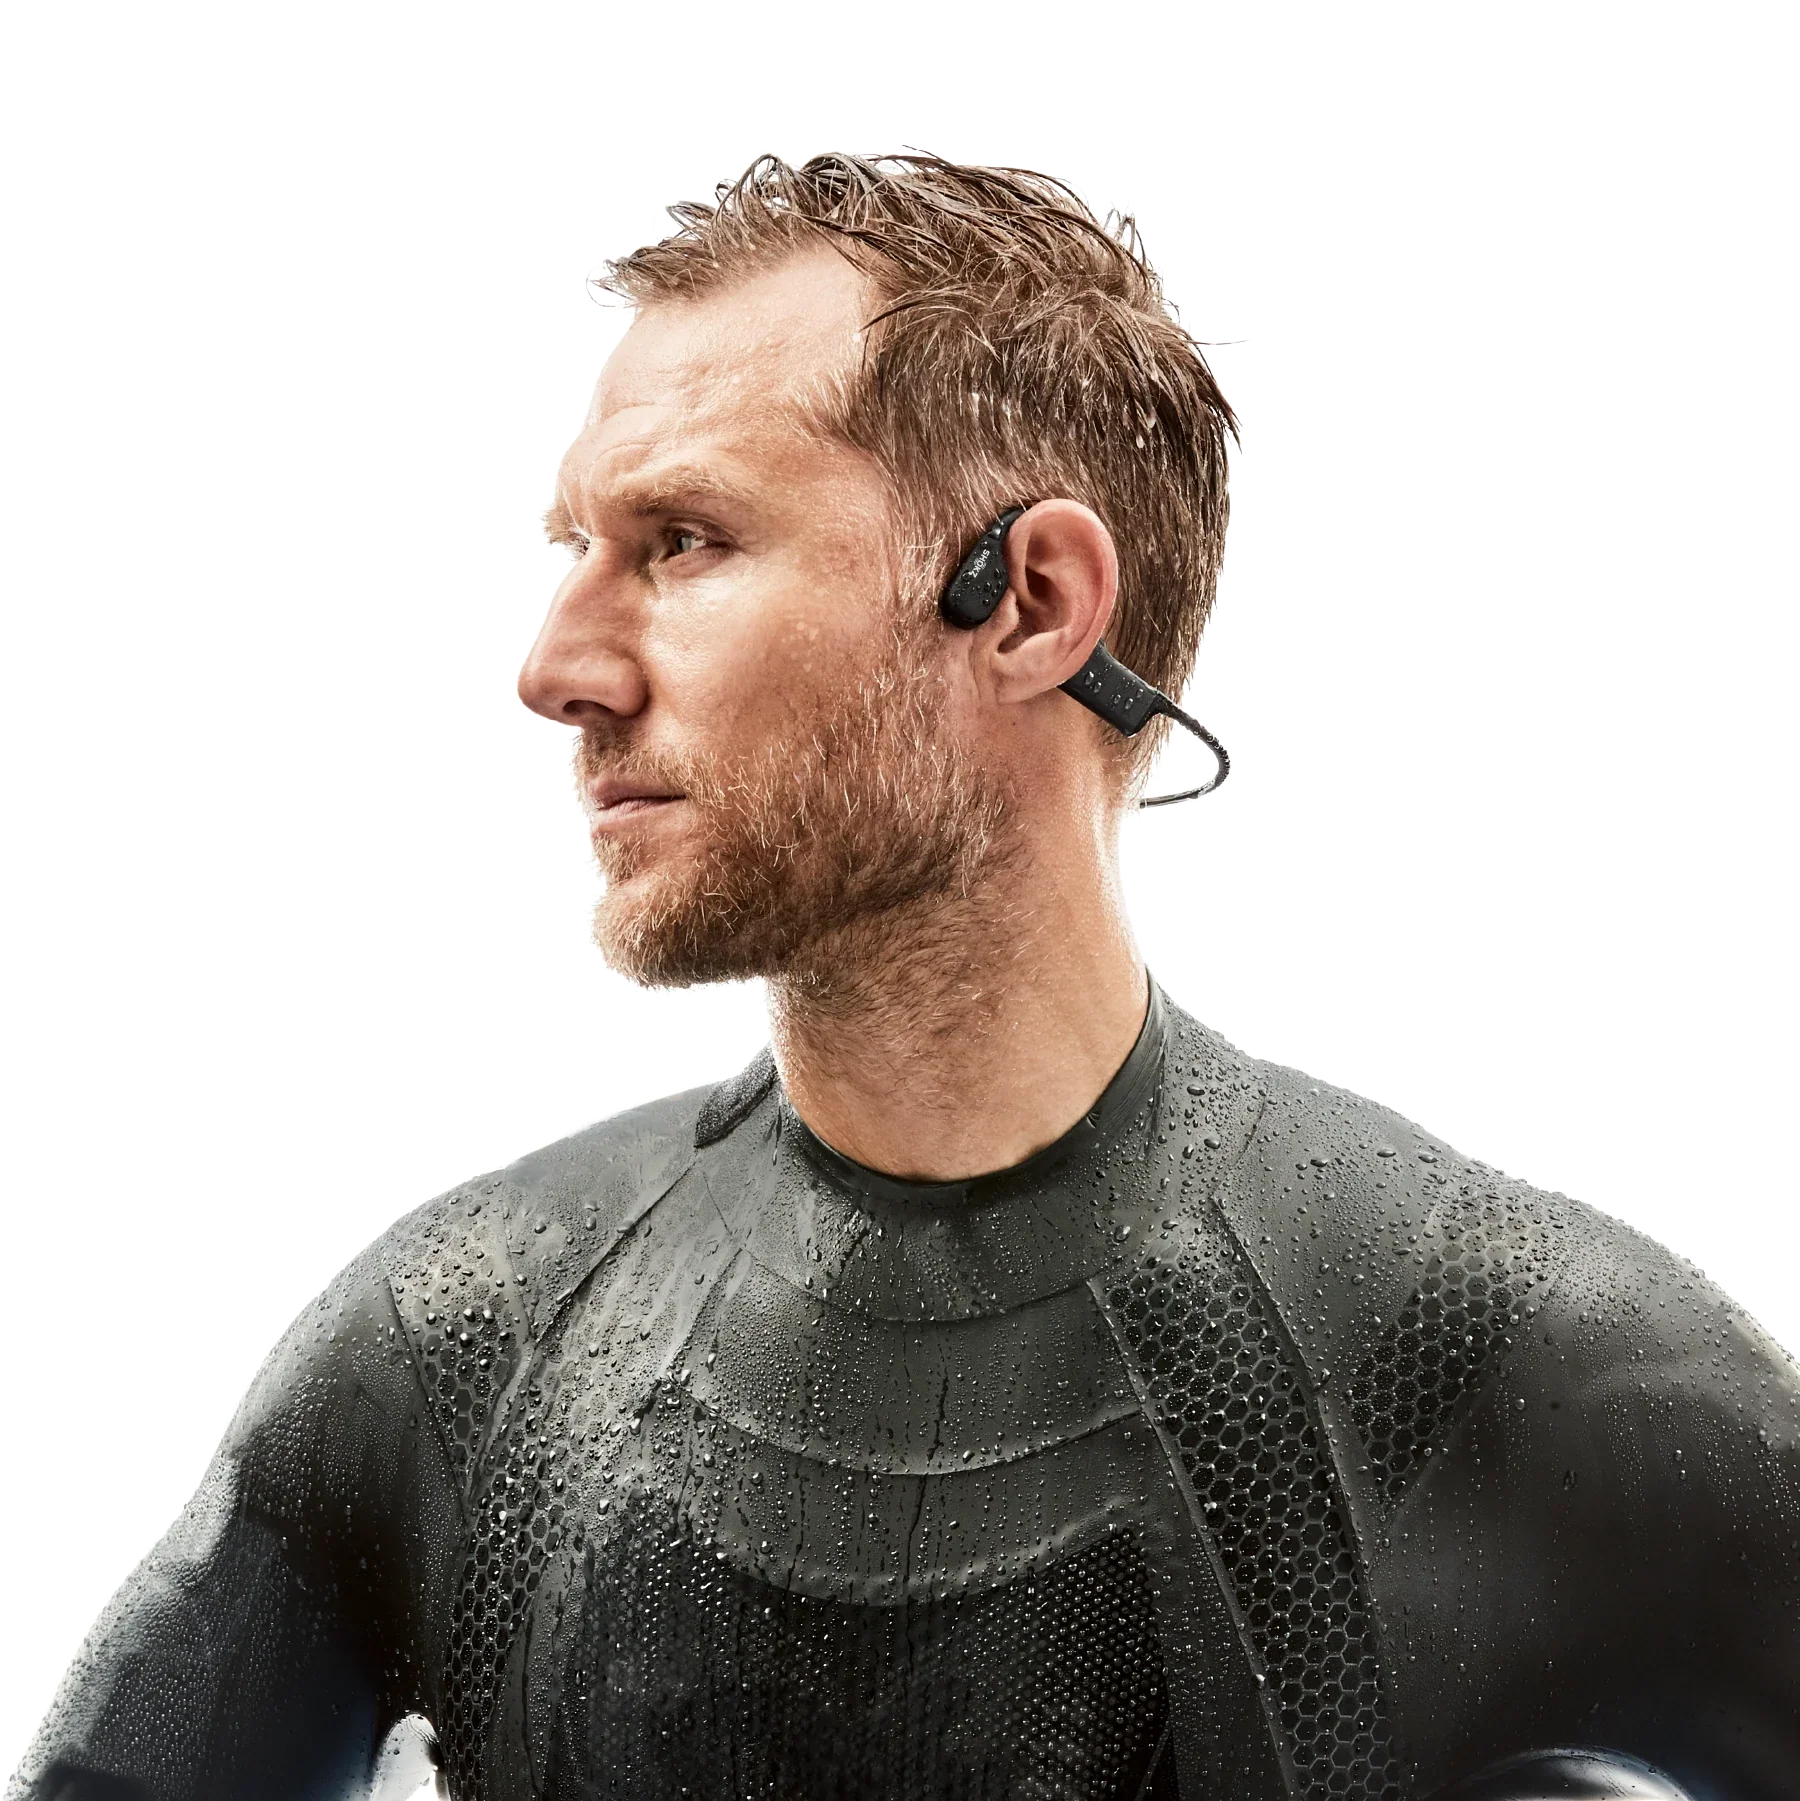 Shokz Openswim Bone Conduction Wireless Headphones IP68 Waterproof – Shokz  ES